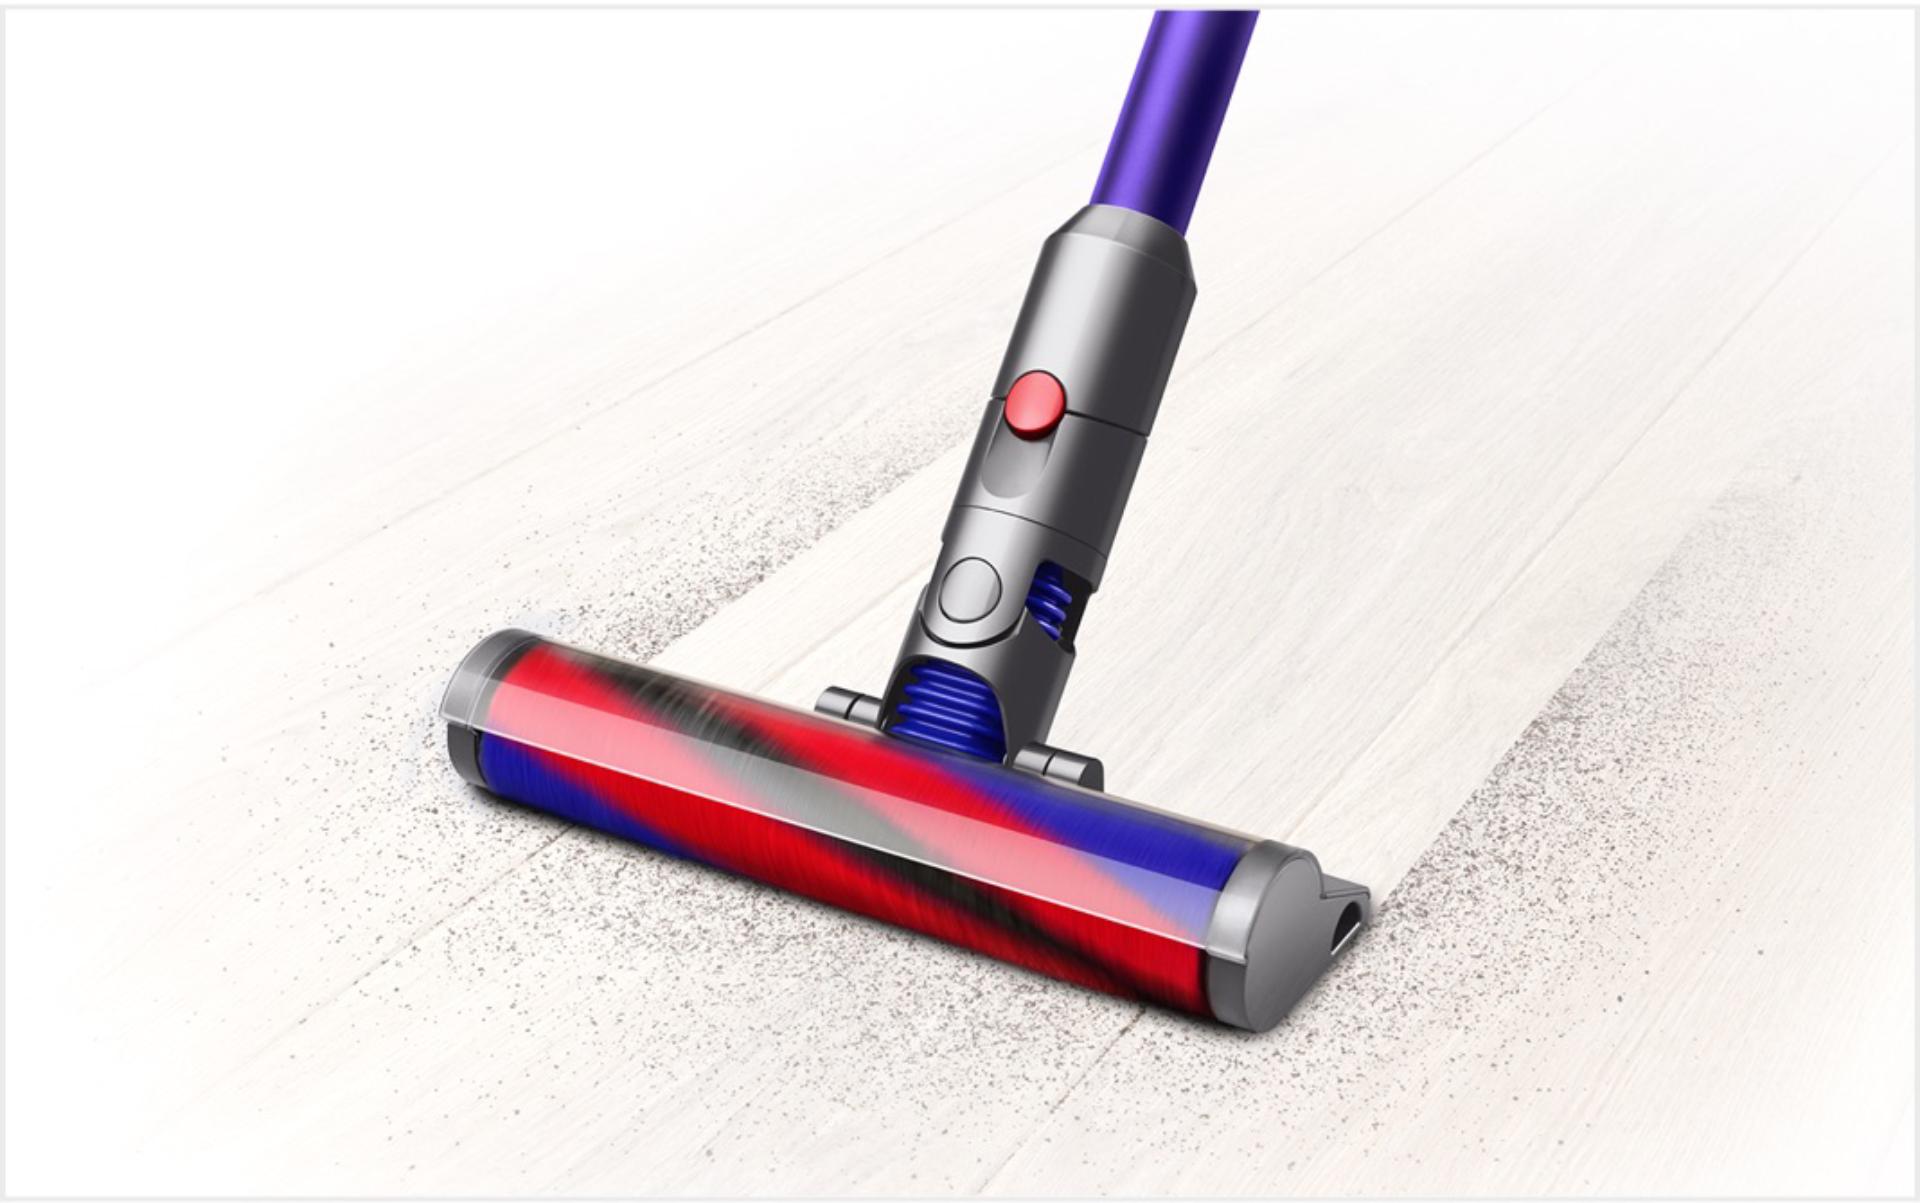 Dyson Digital Slim™ 輕量無線吸塵機正在清潔地板的圖像。